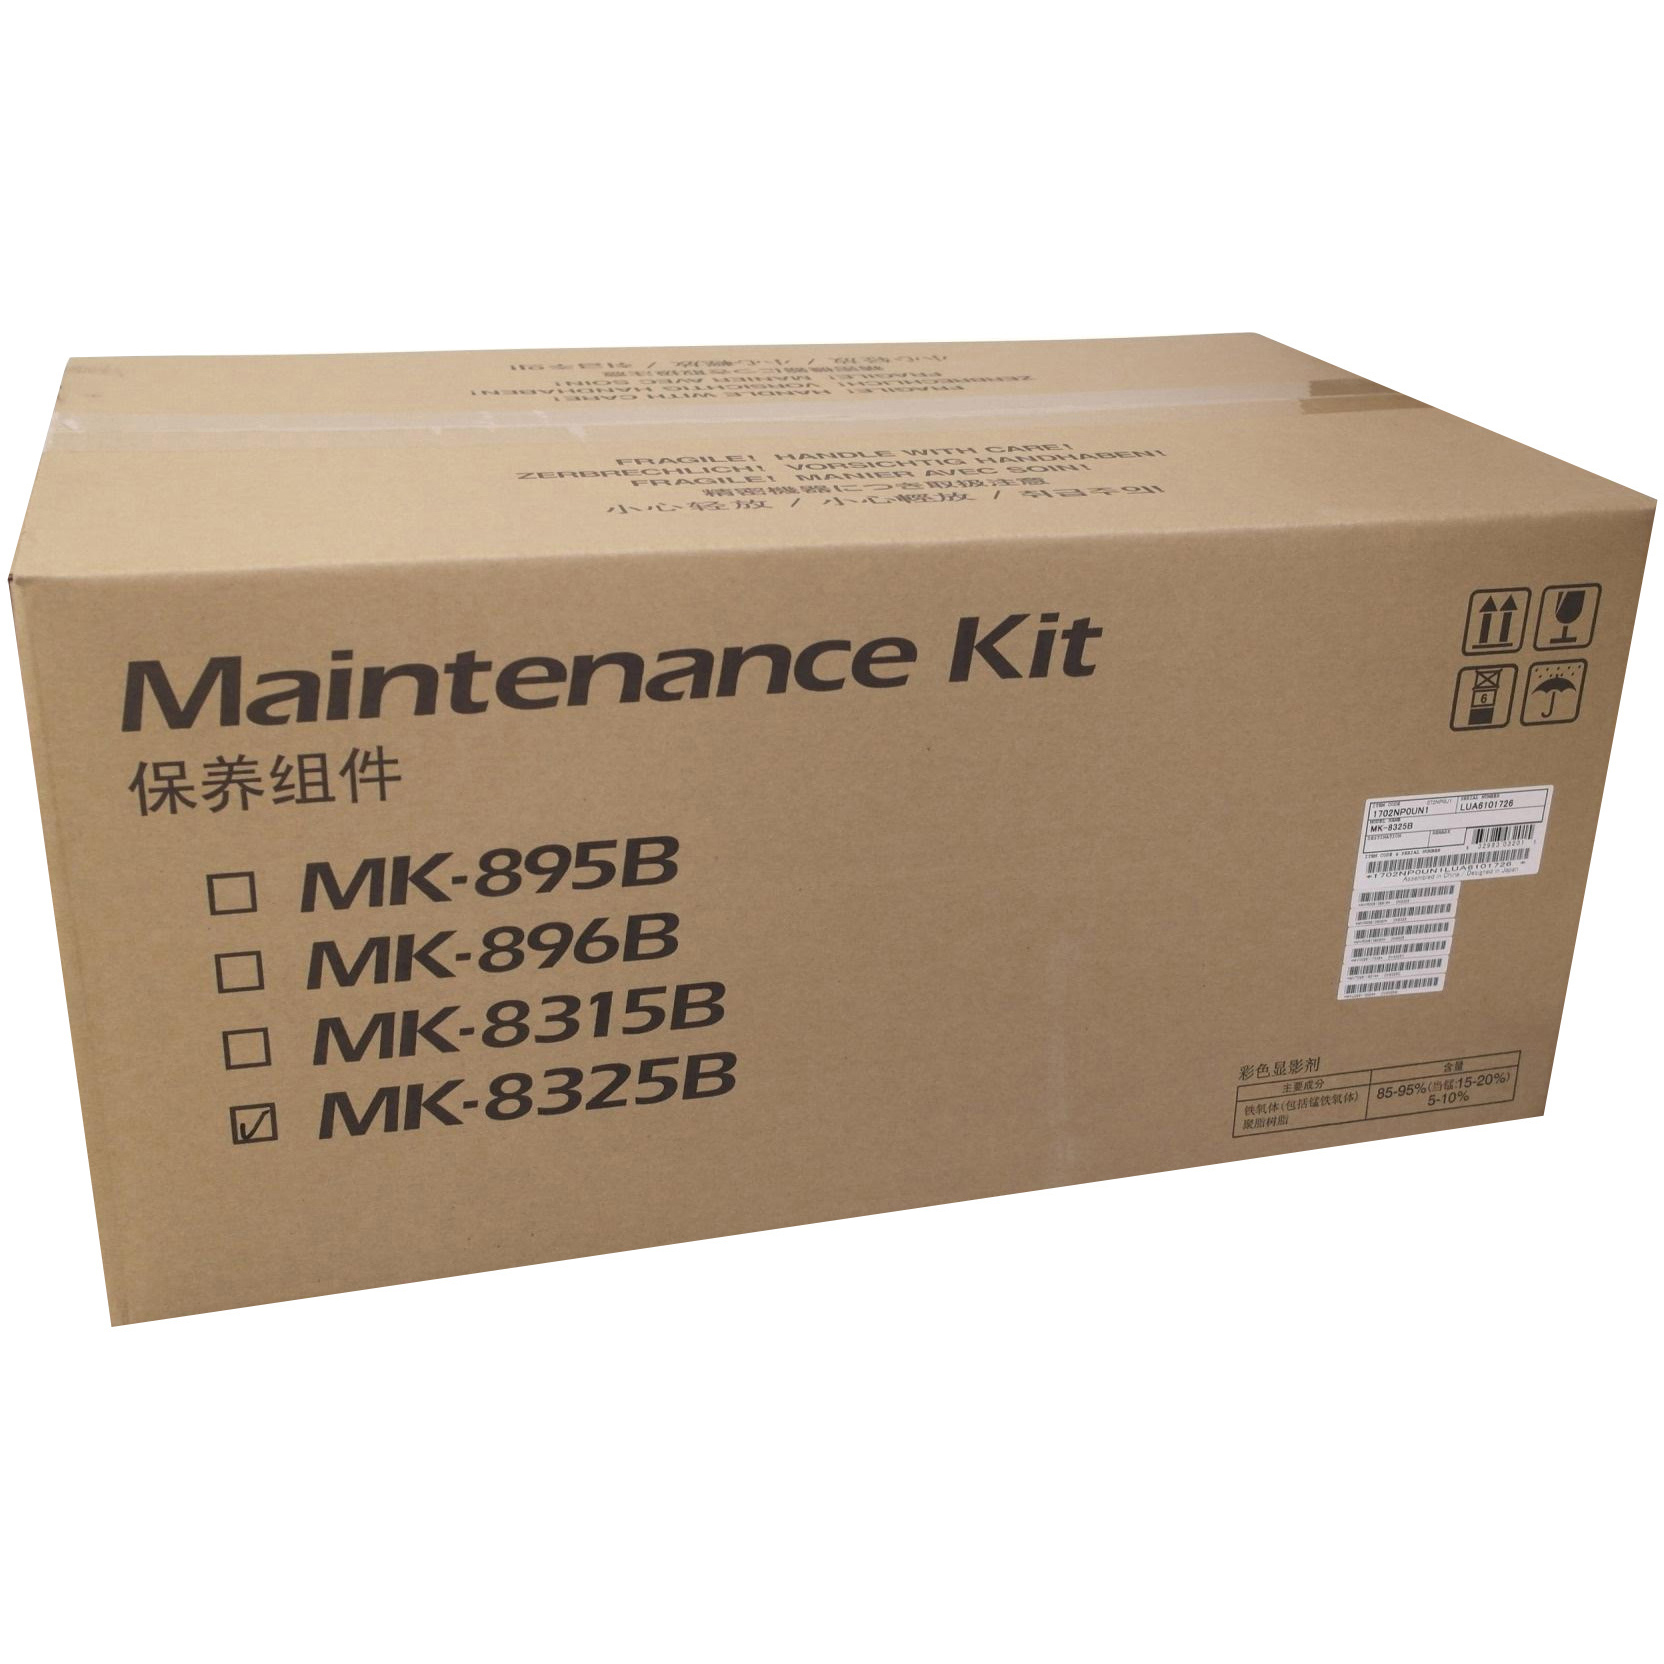 Original Kyocera 072NP0U1 Colour Maintenance Kit (MK-8325B)